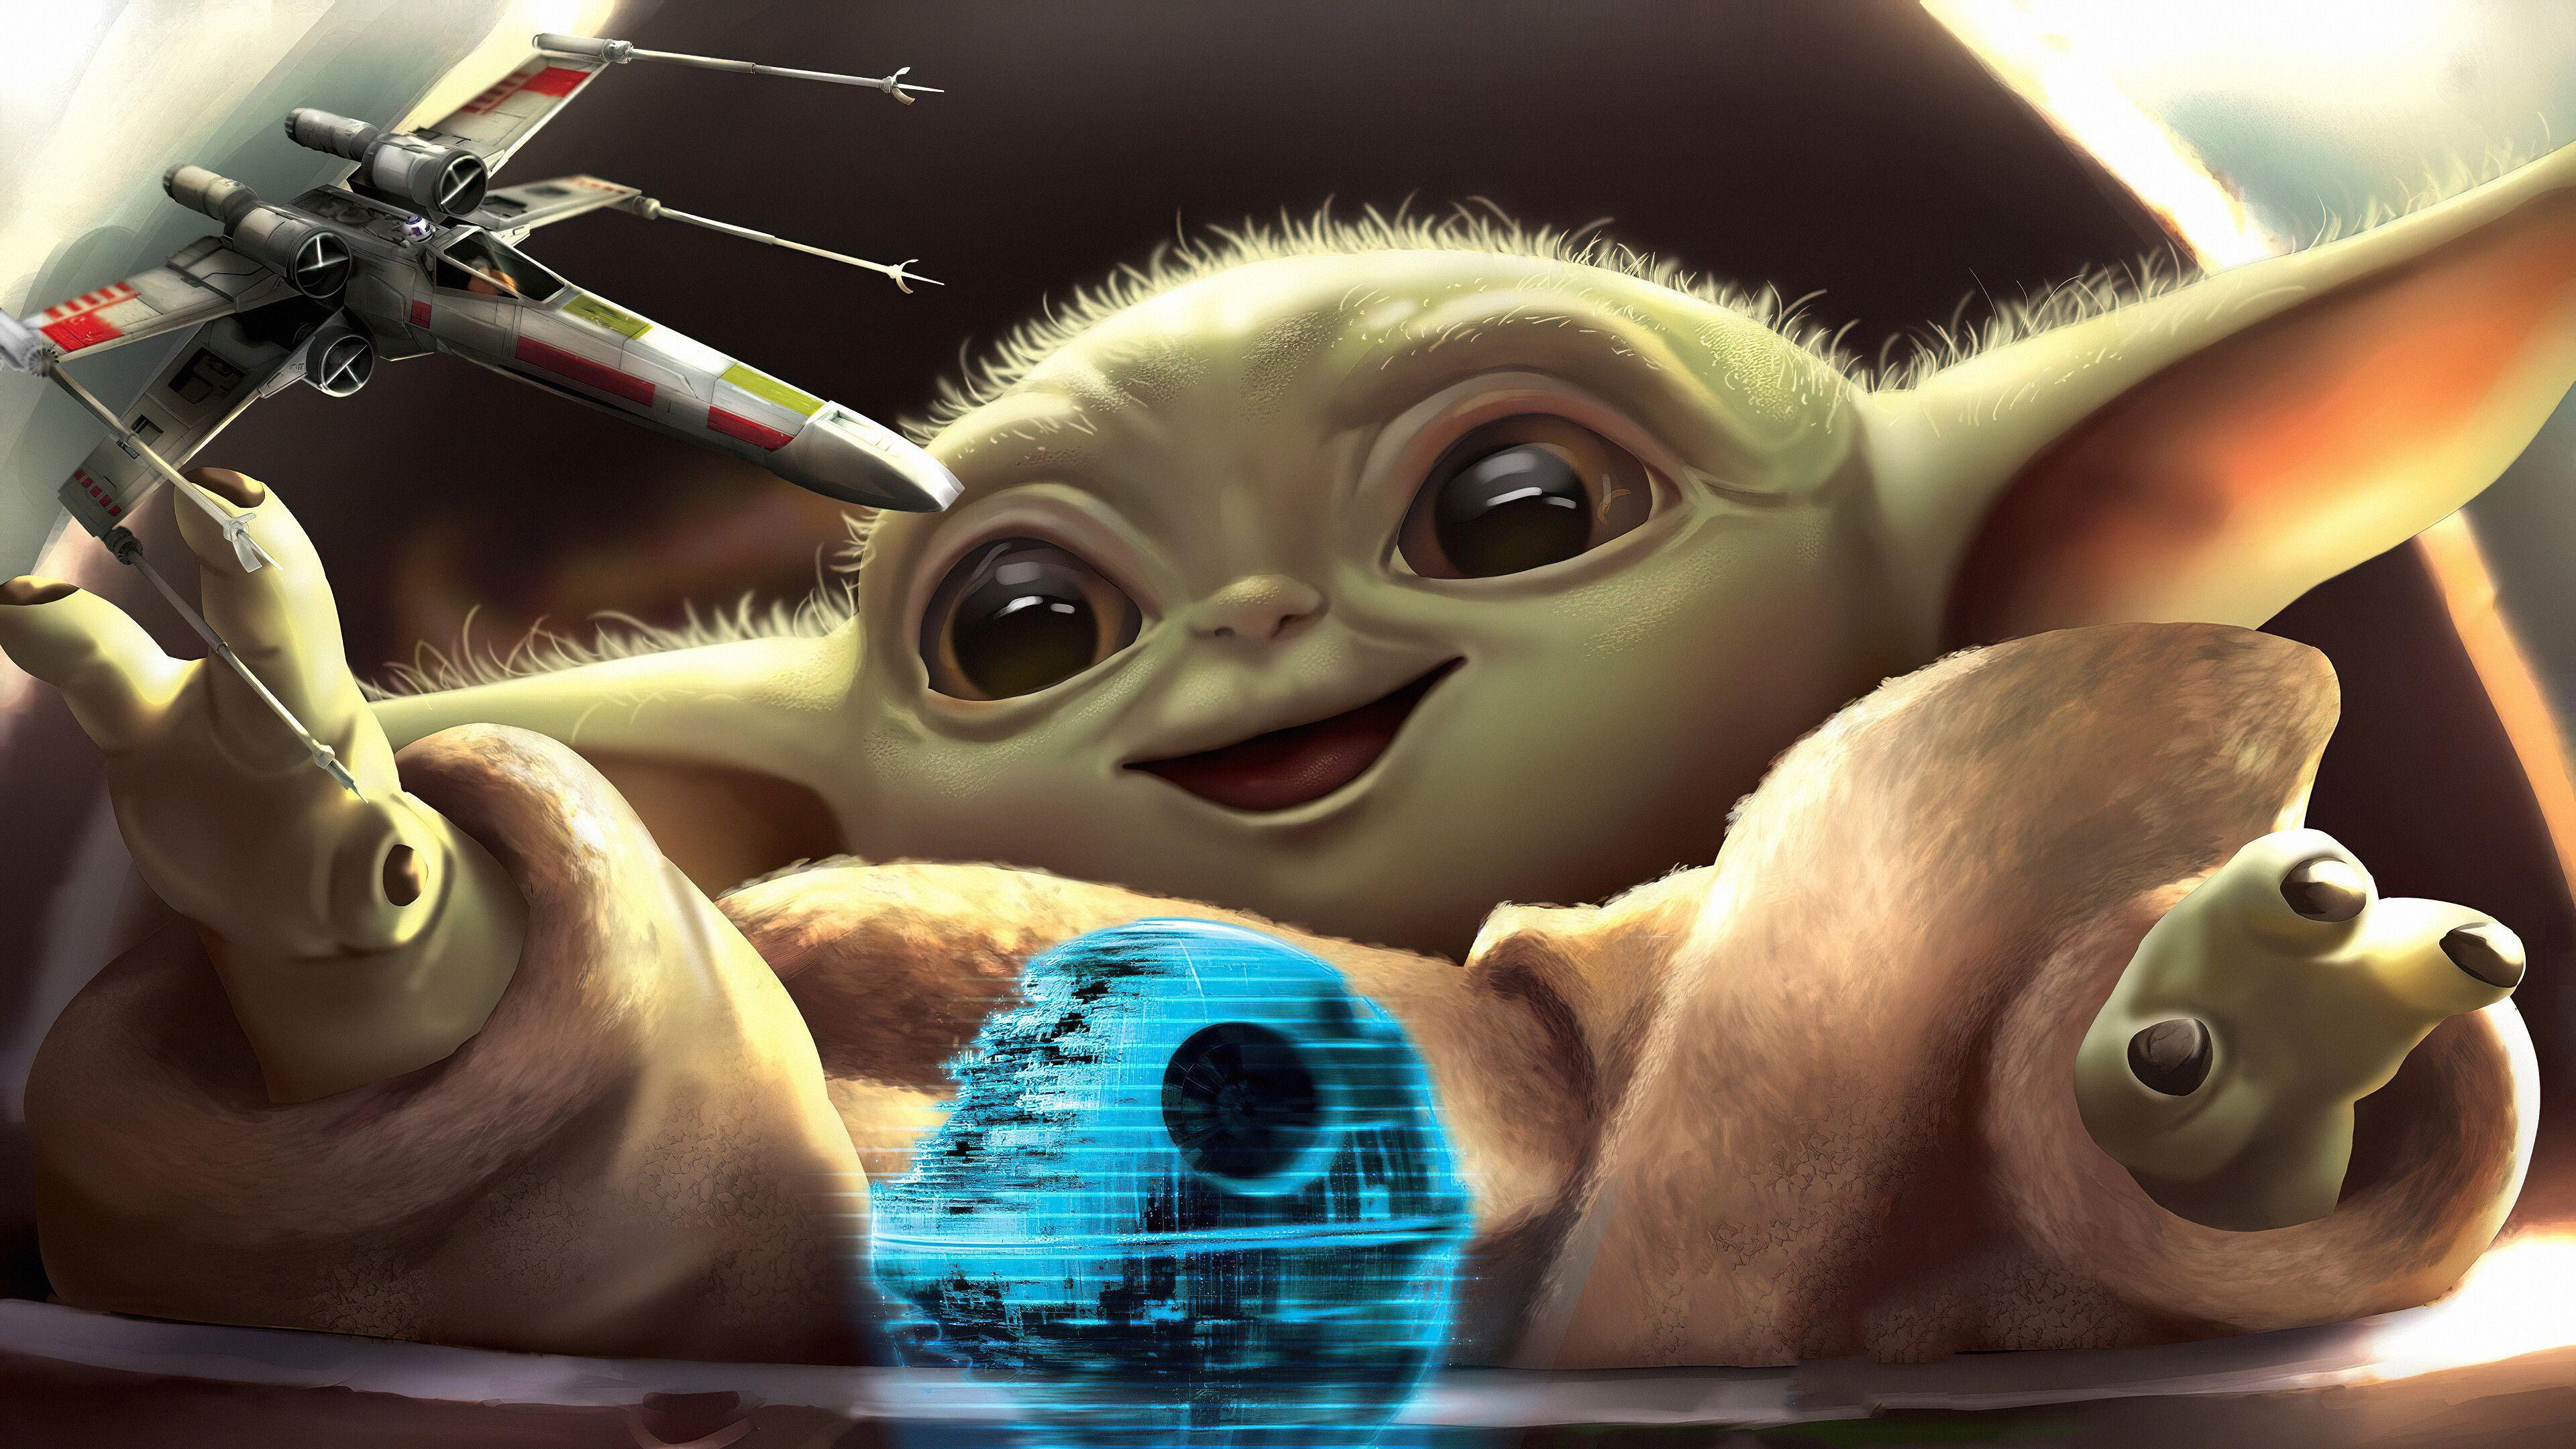 Star Wars Baby Yoda Wallpapers Top Free Star Wars Baby Yoda Backgrounds Wallpaperaccess